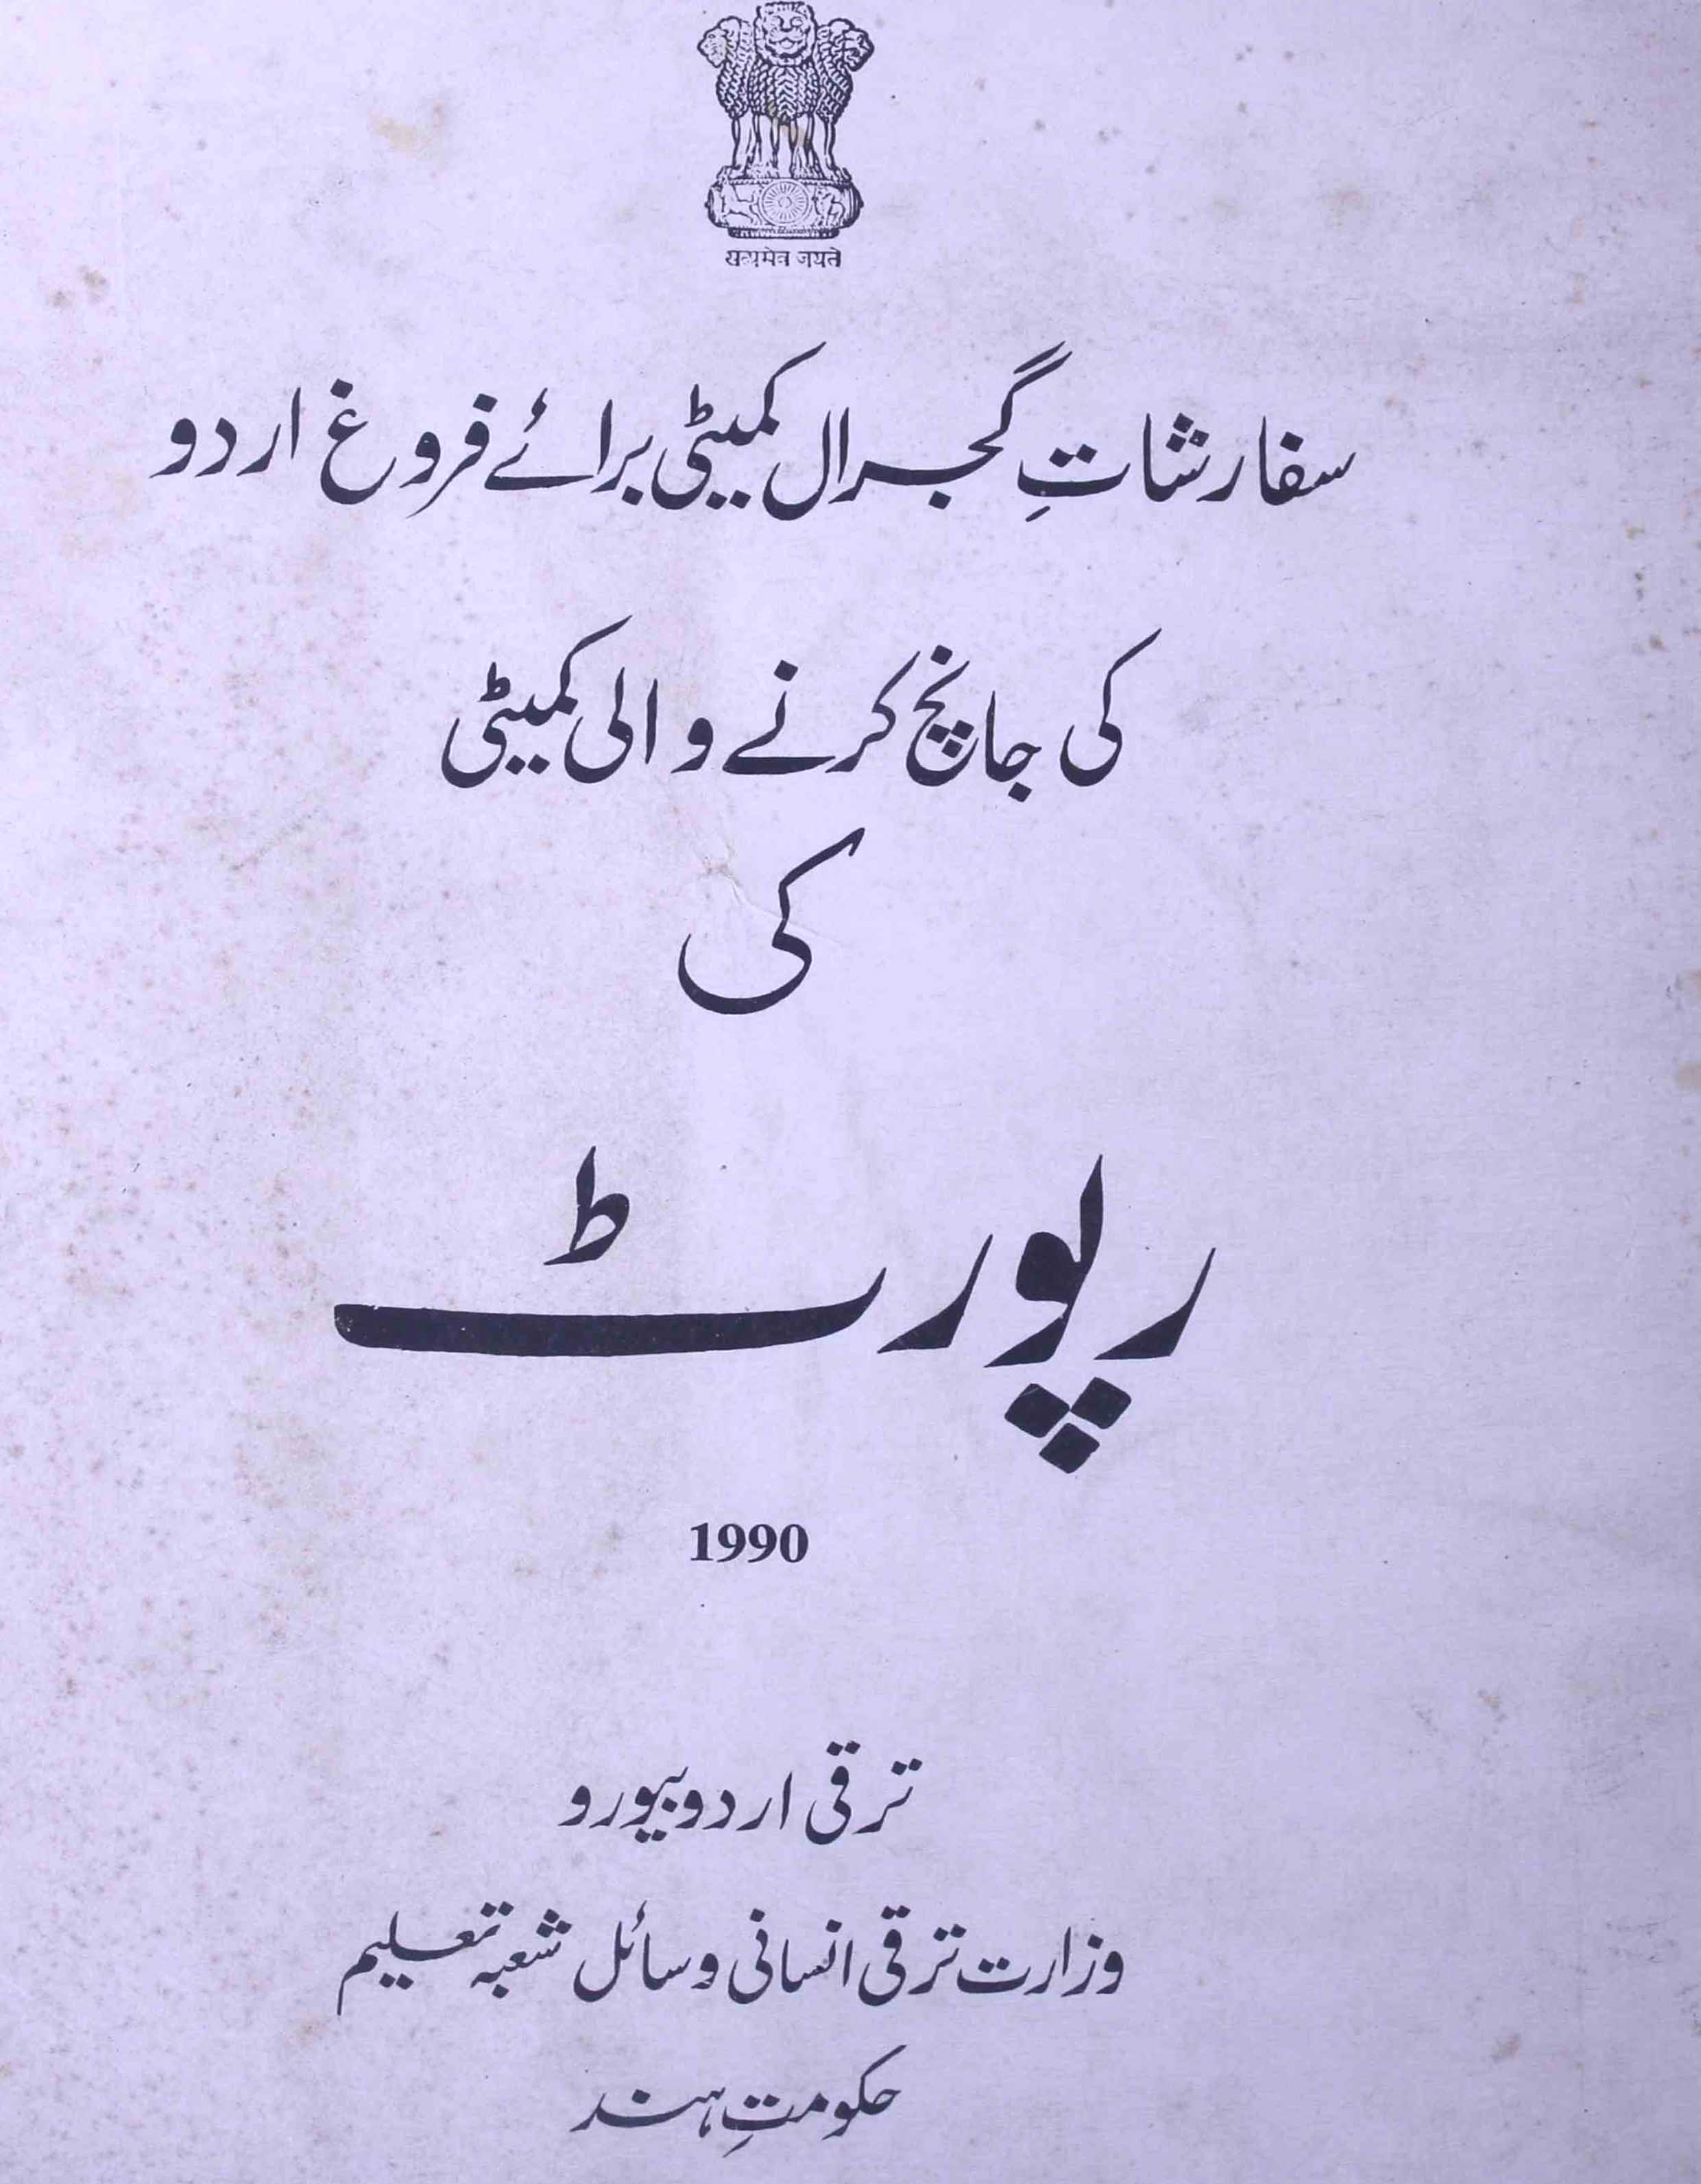 Sifarishat Gujral Committee Baraye Farogh-e-Urdu Ki Janch Karne Wali Committee Ki Report